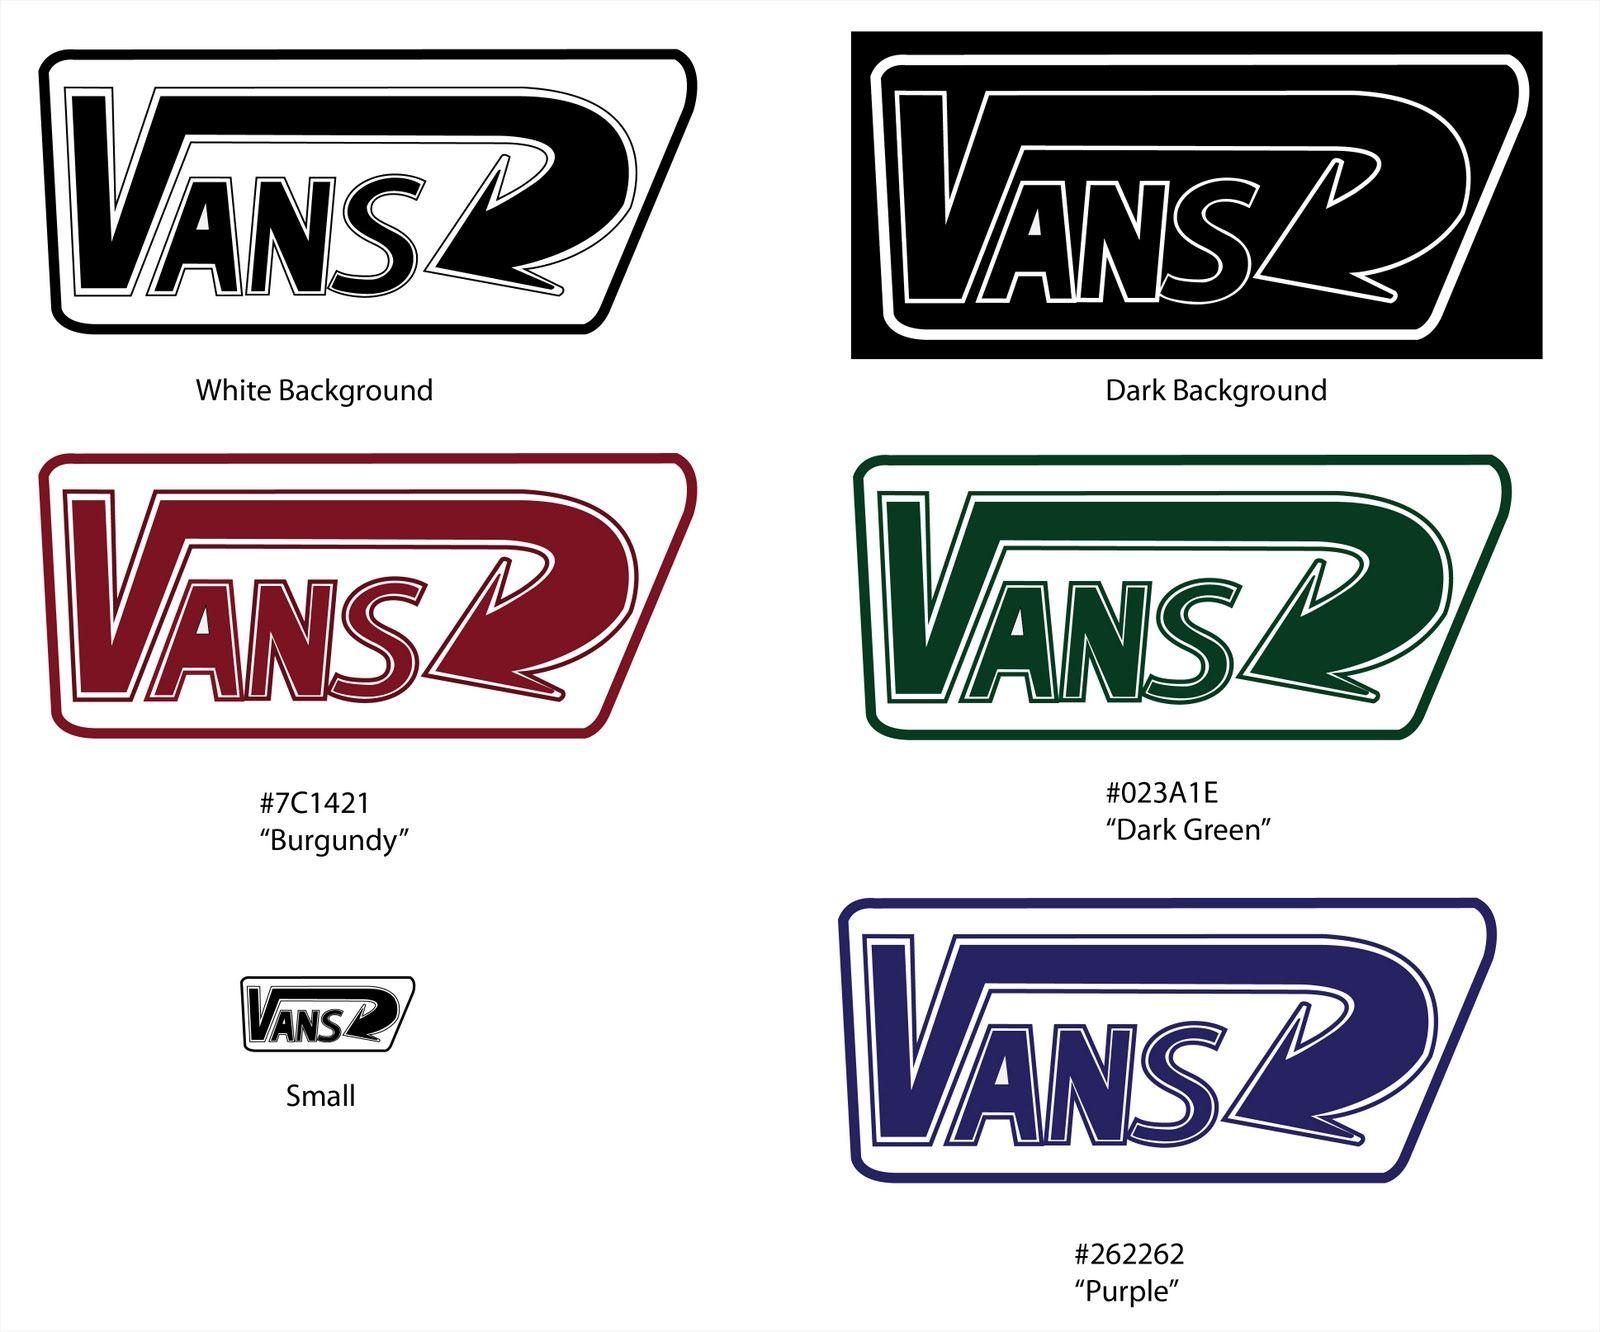 Small Vans Logo - Gallery 91 Inc.: VANS logo re-brand: Final Design